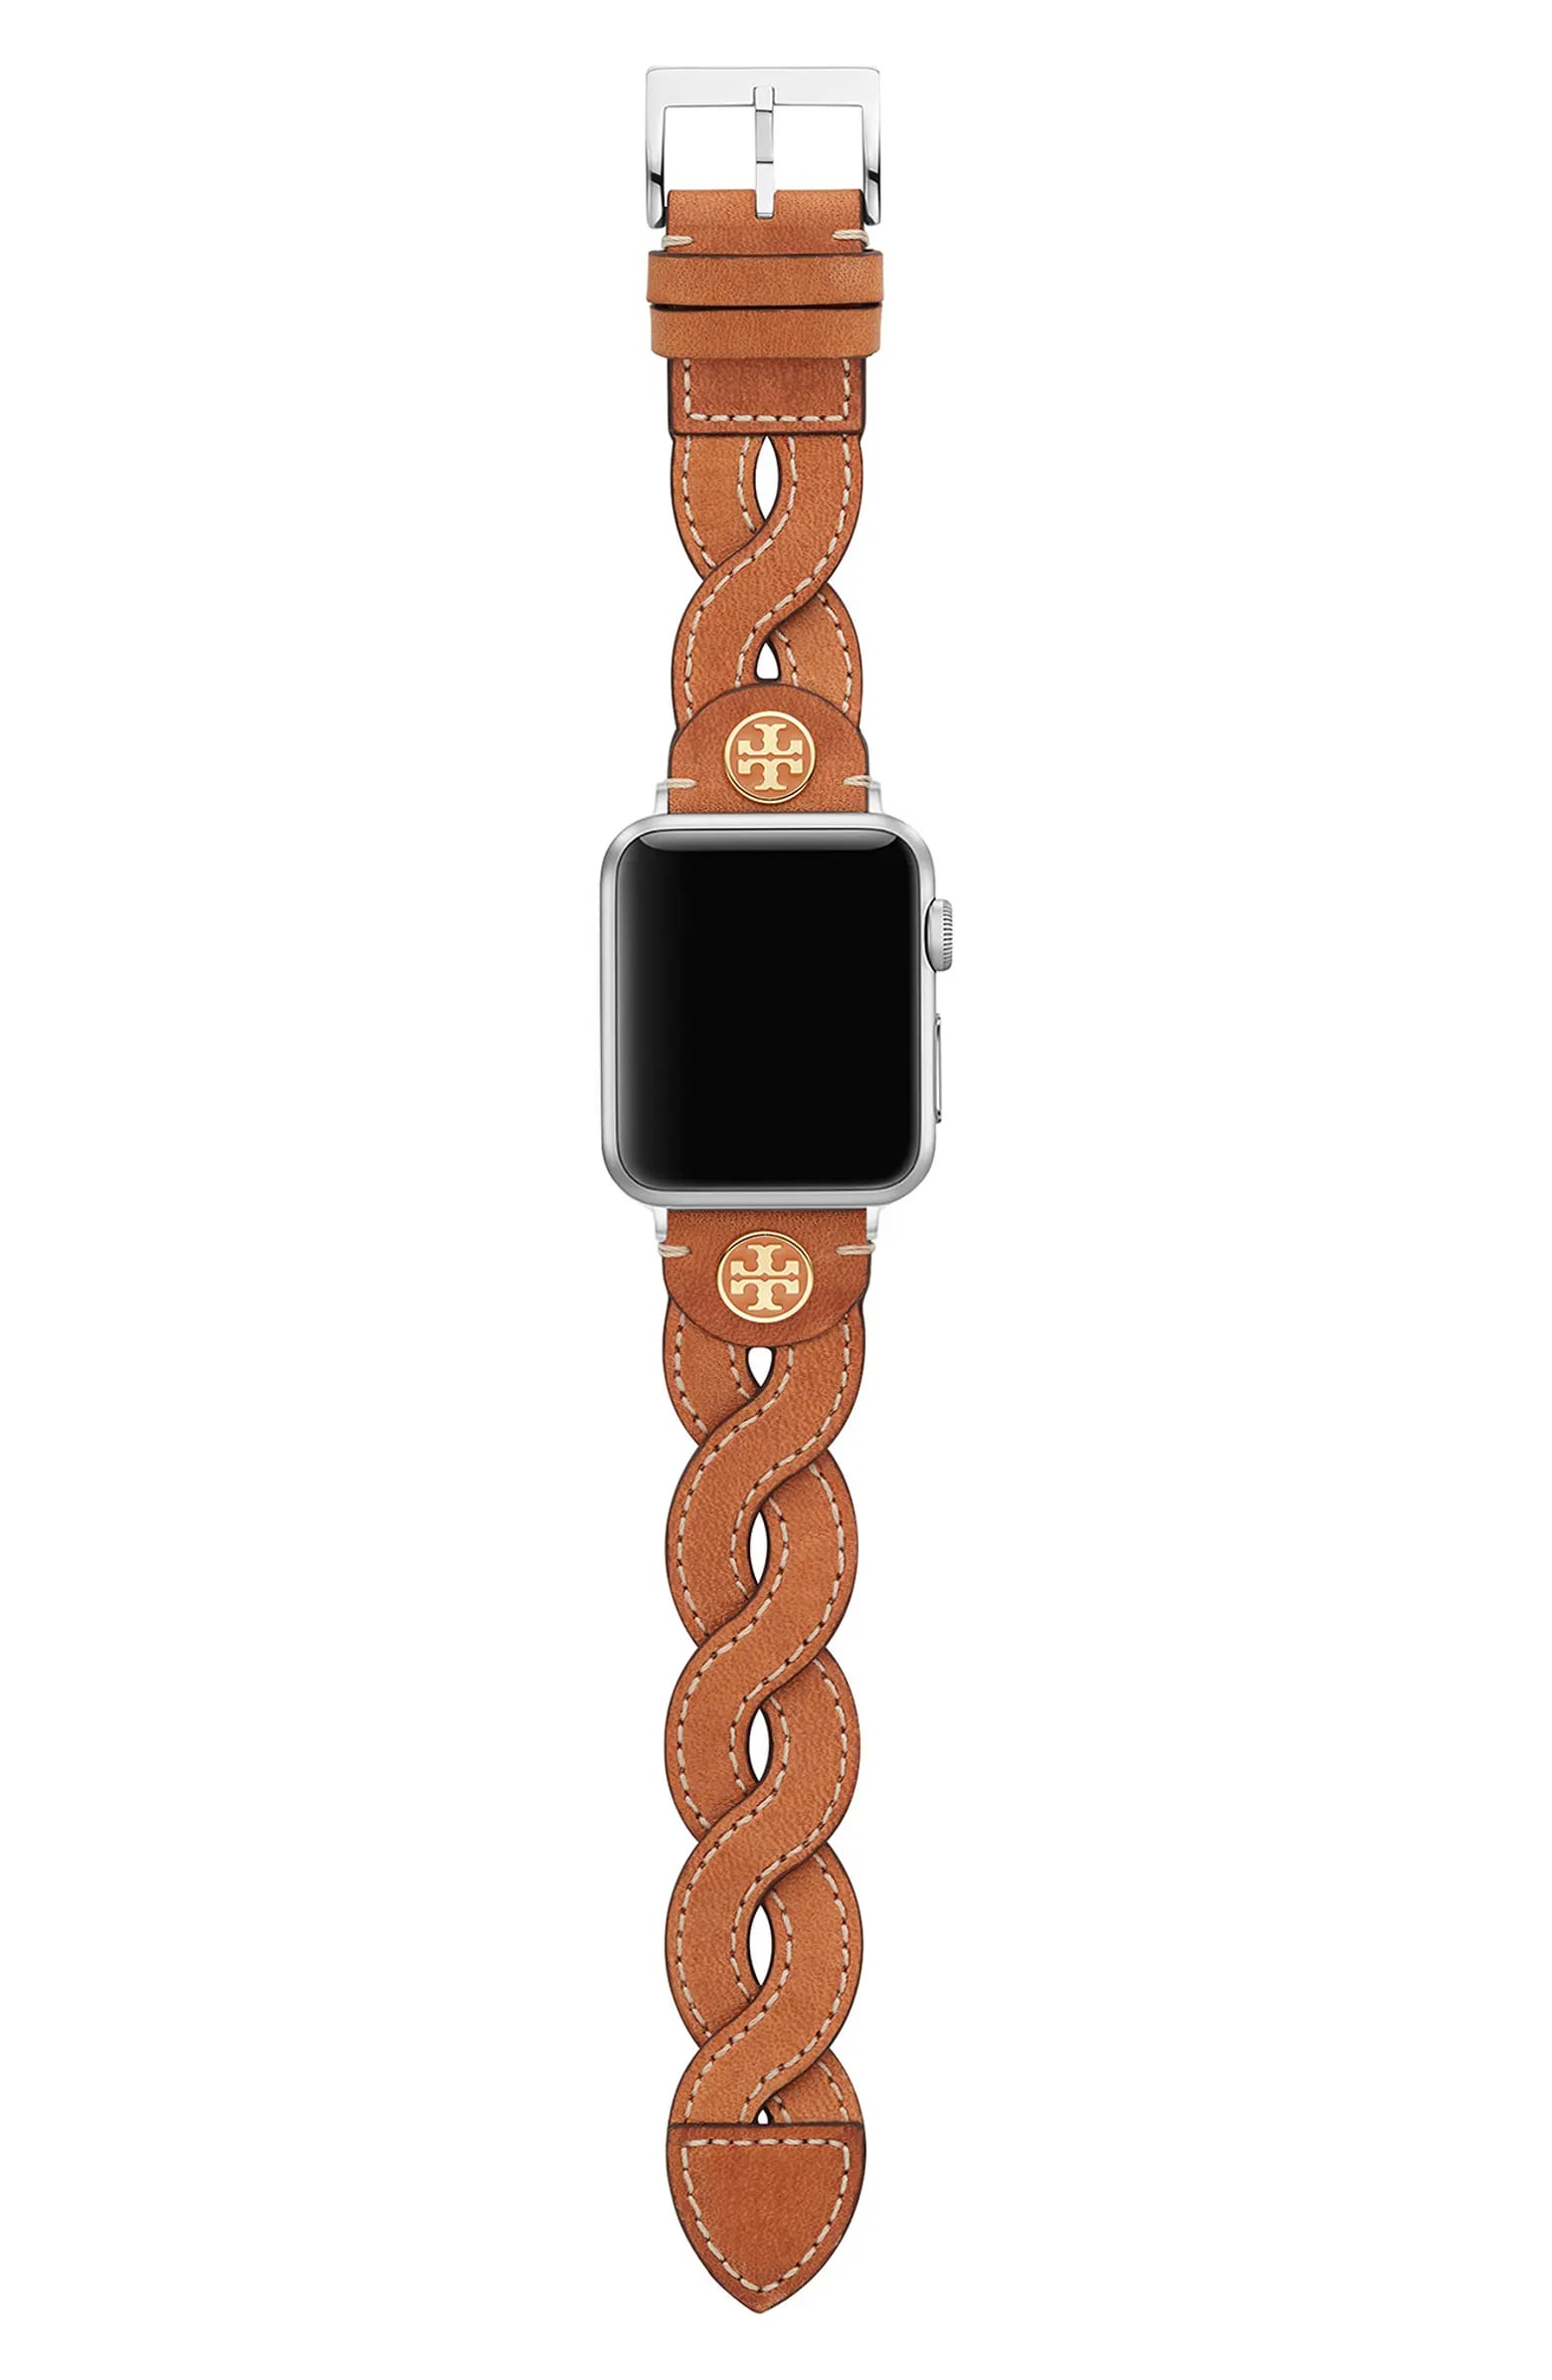 Easy DIY Louis Vuitton Apple Watch Band